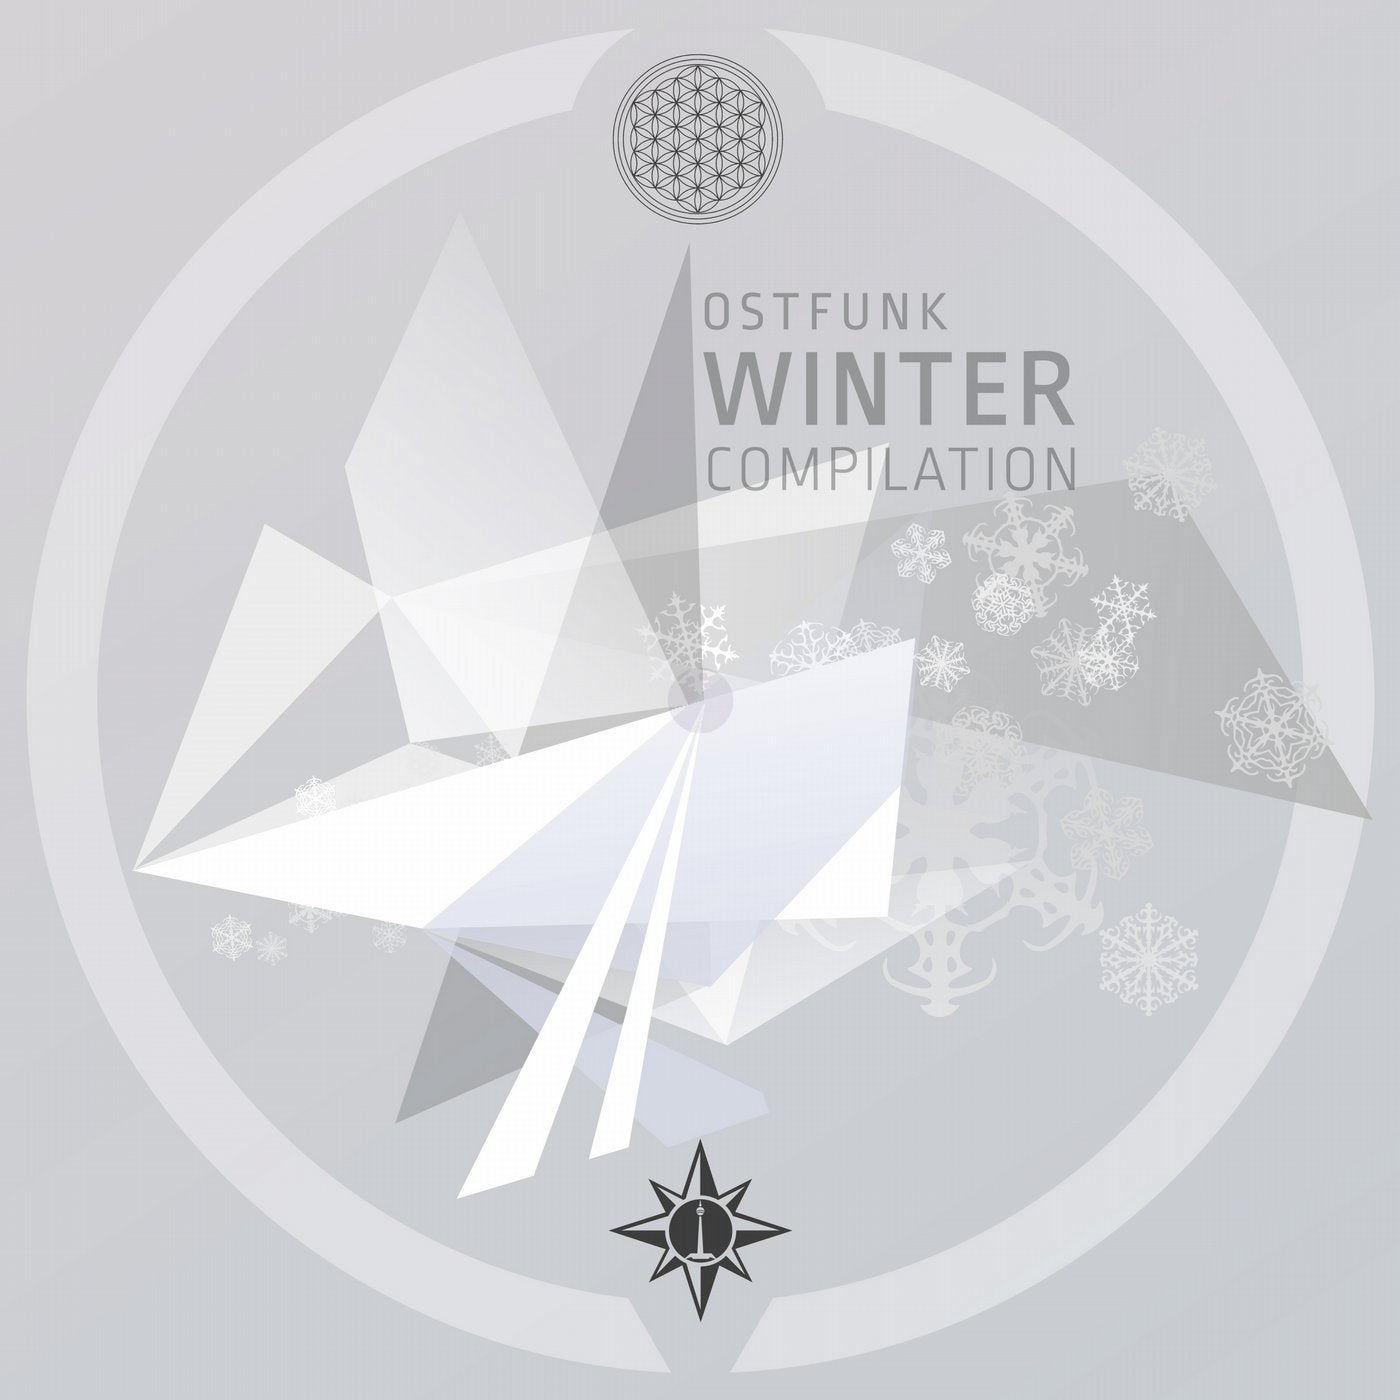 Ostfunk Winter Compilation 2015